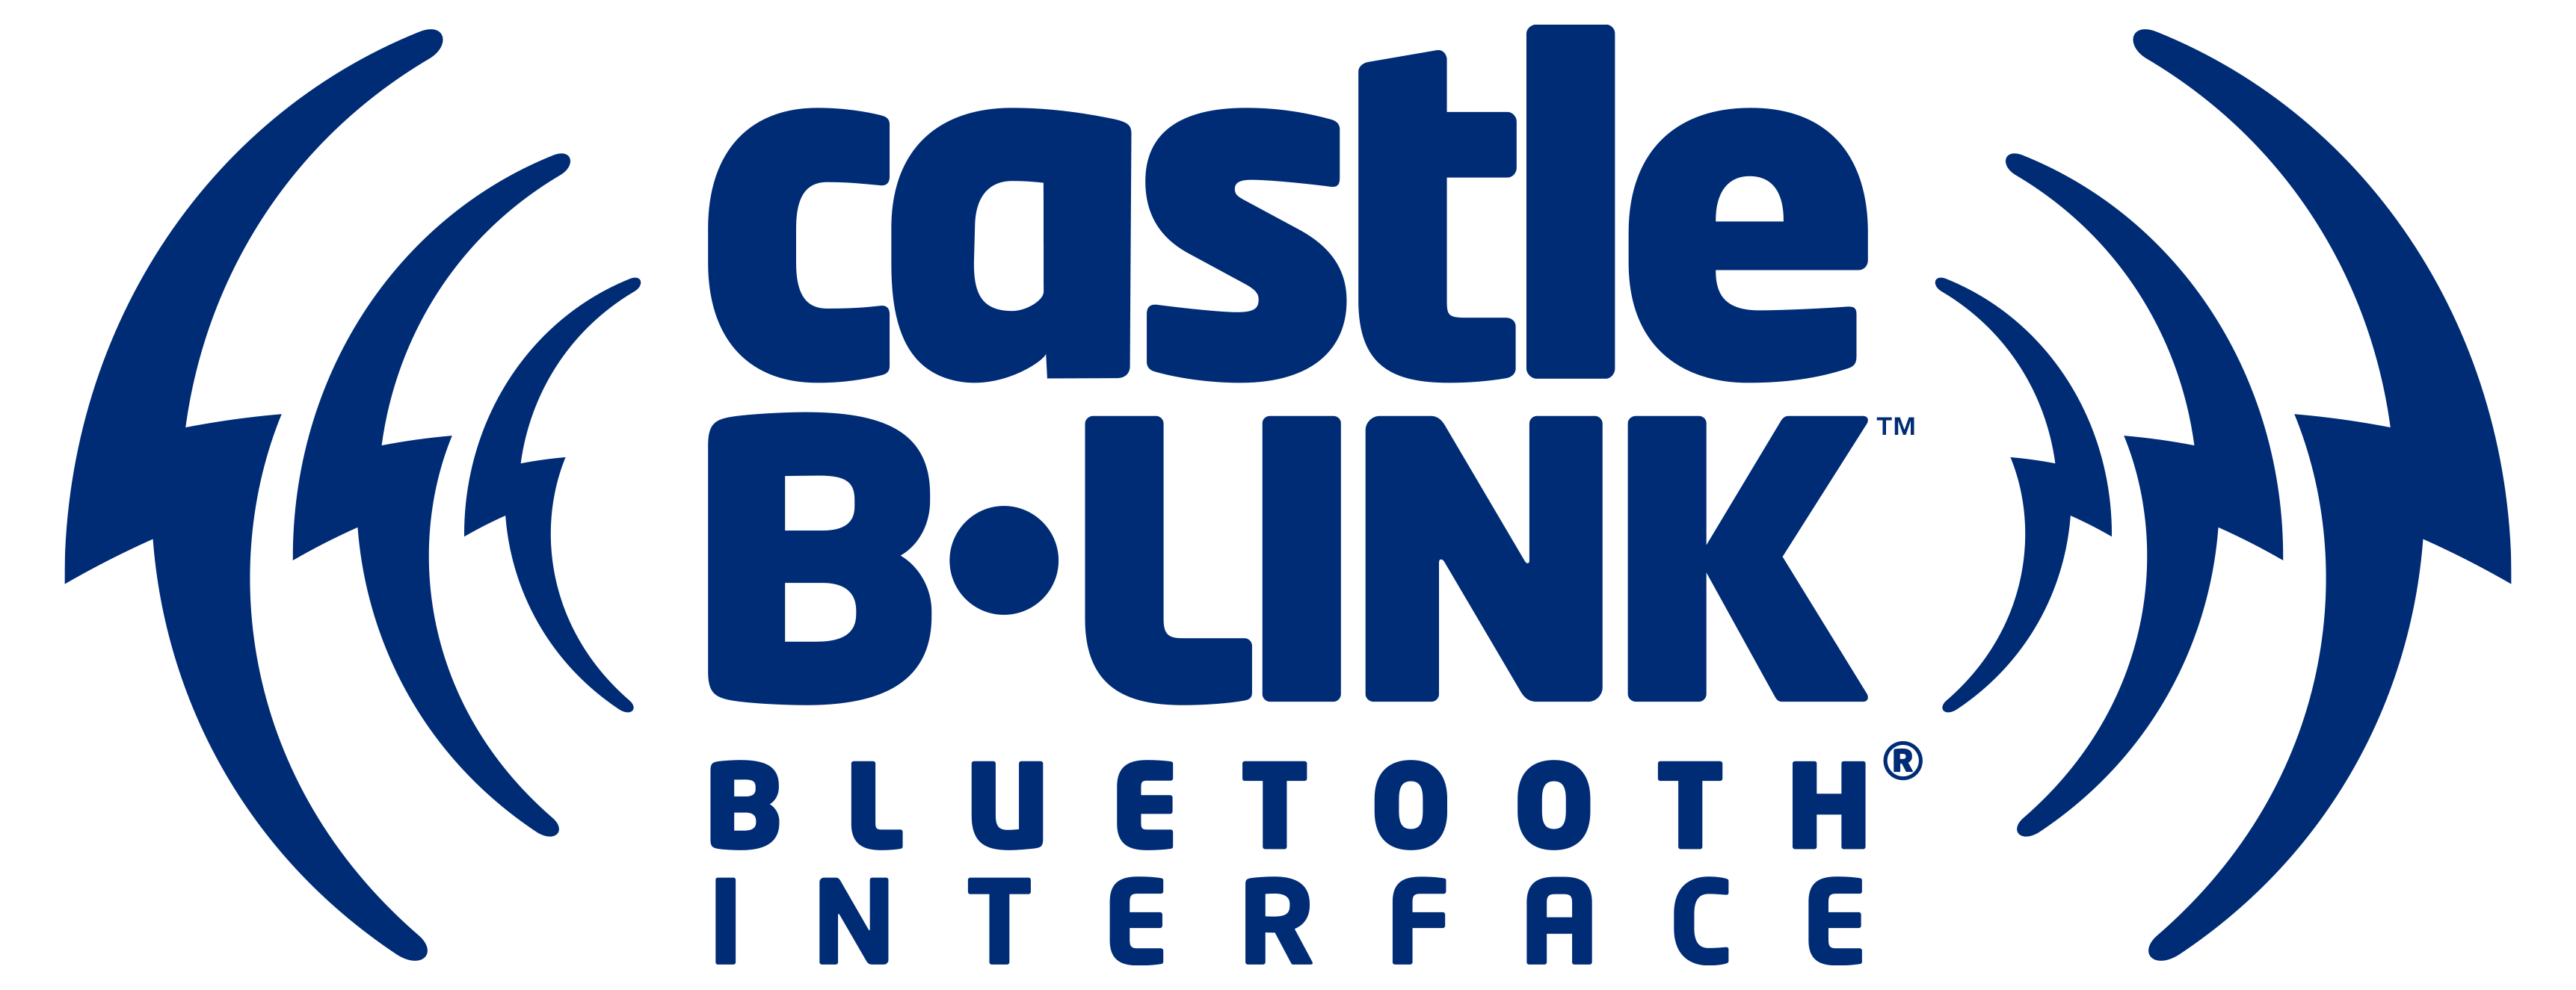 http://www.castlecreations.com/img/product/description/logos/Castle-B-Link-Logo.png?fv=69B8F55D52741C1507F2AC17615DFBA7-154623